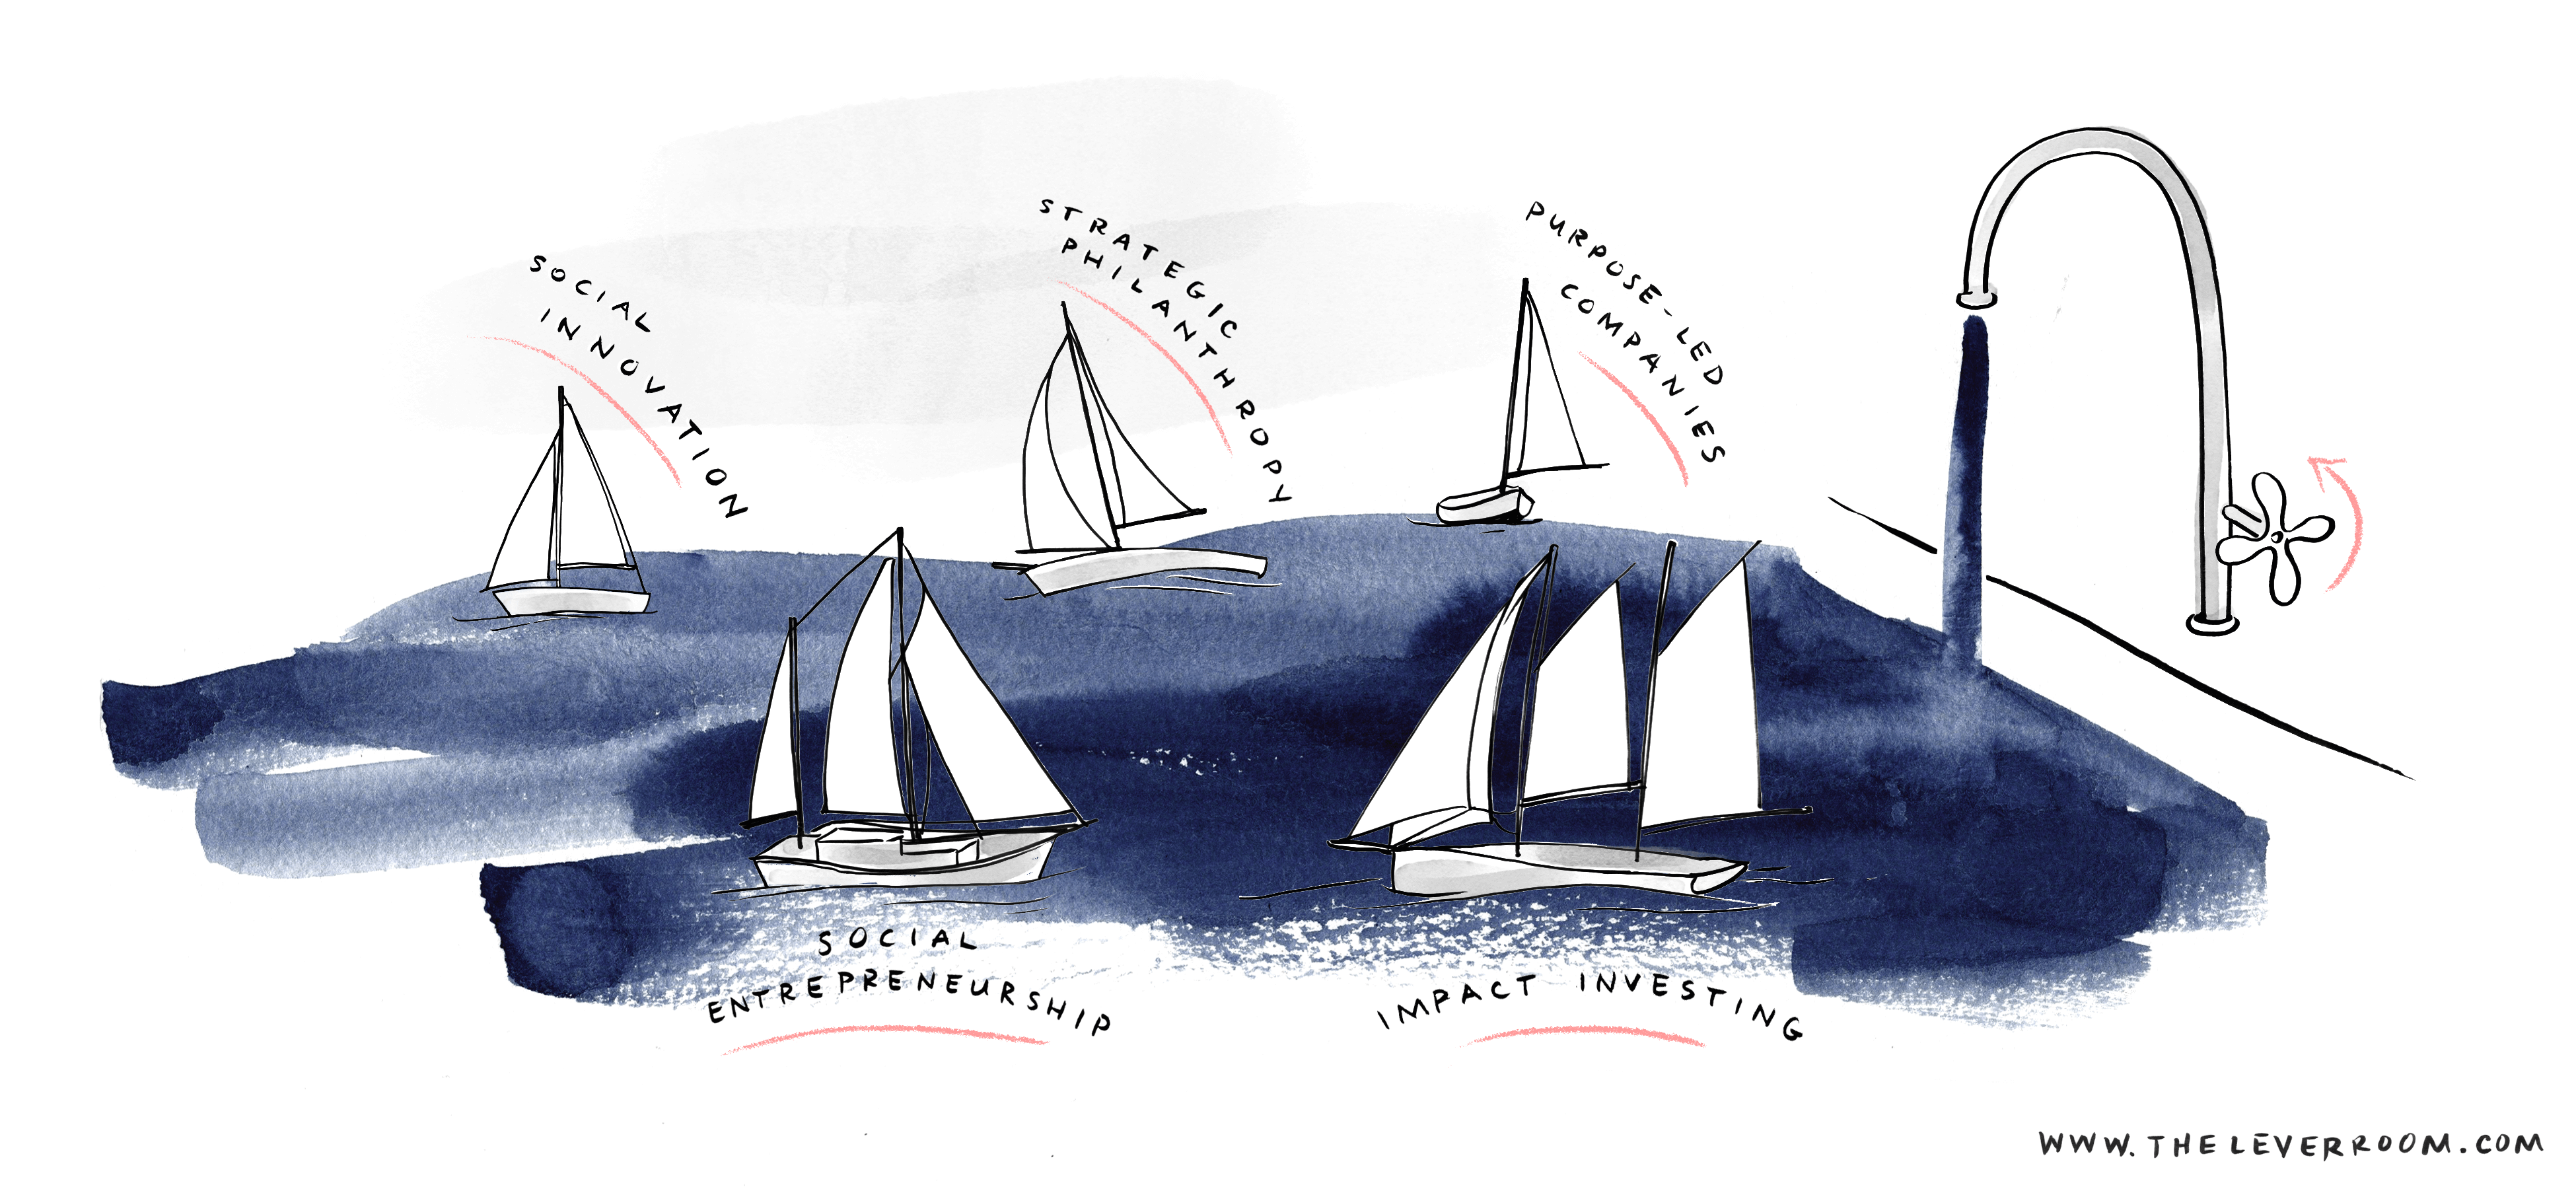 Sailboats-illustration_The-Lever-Room_Erin-Ellis-1